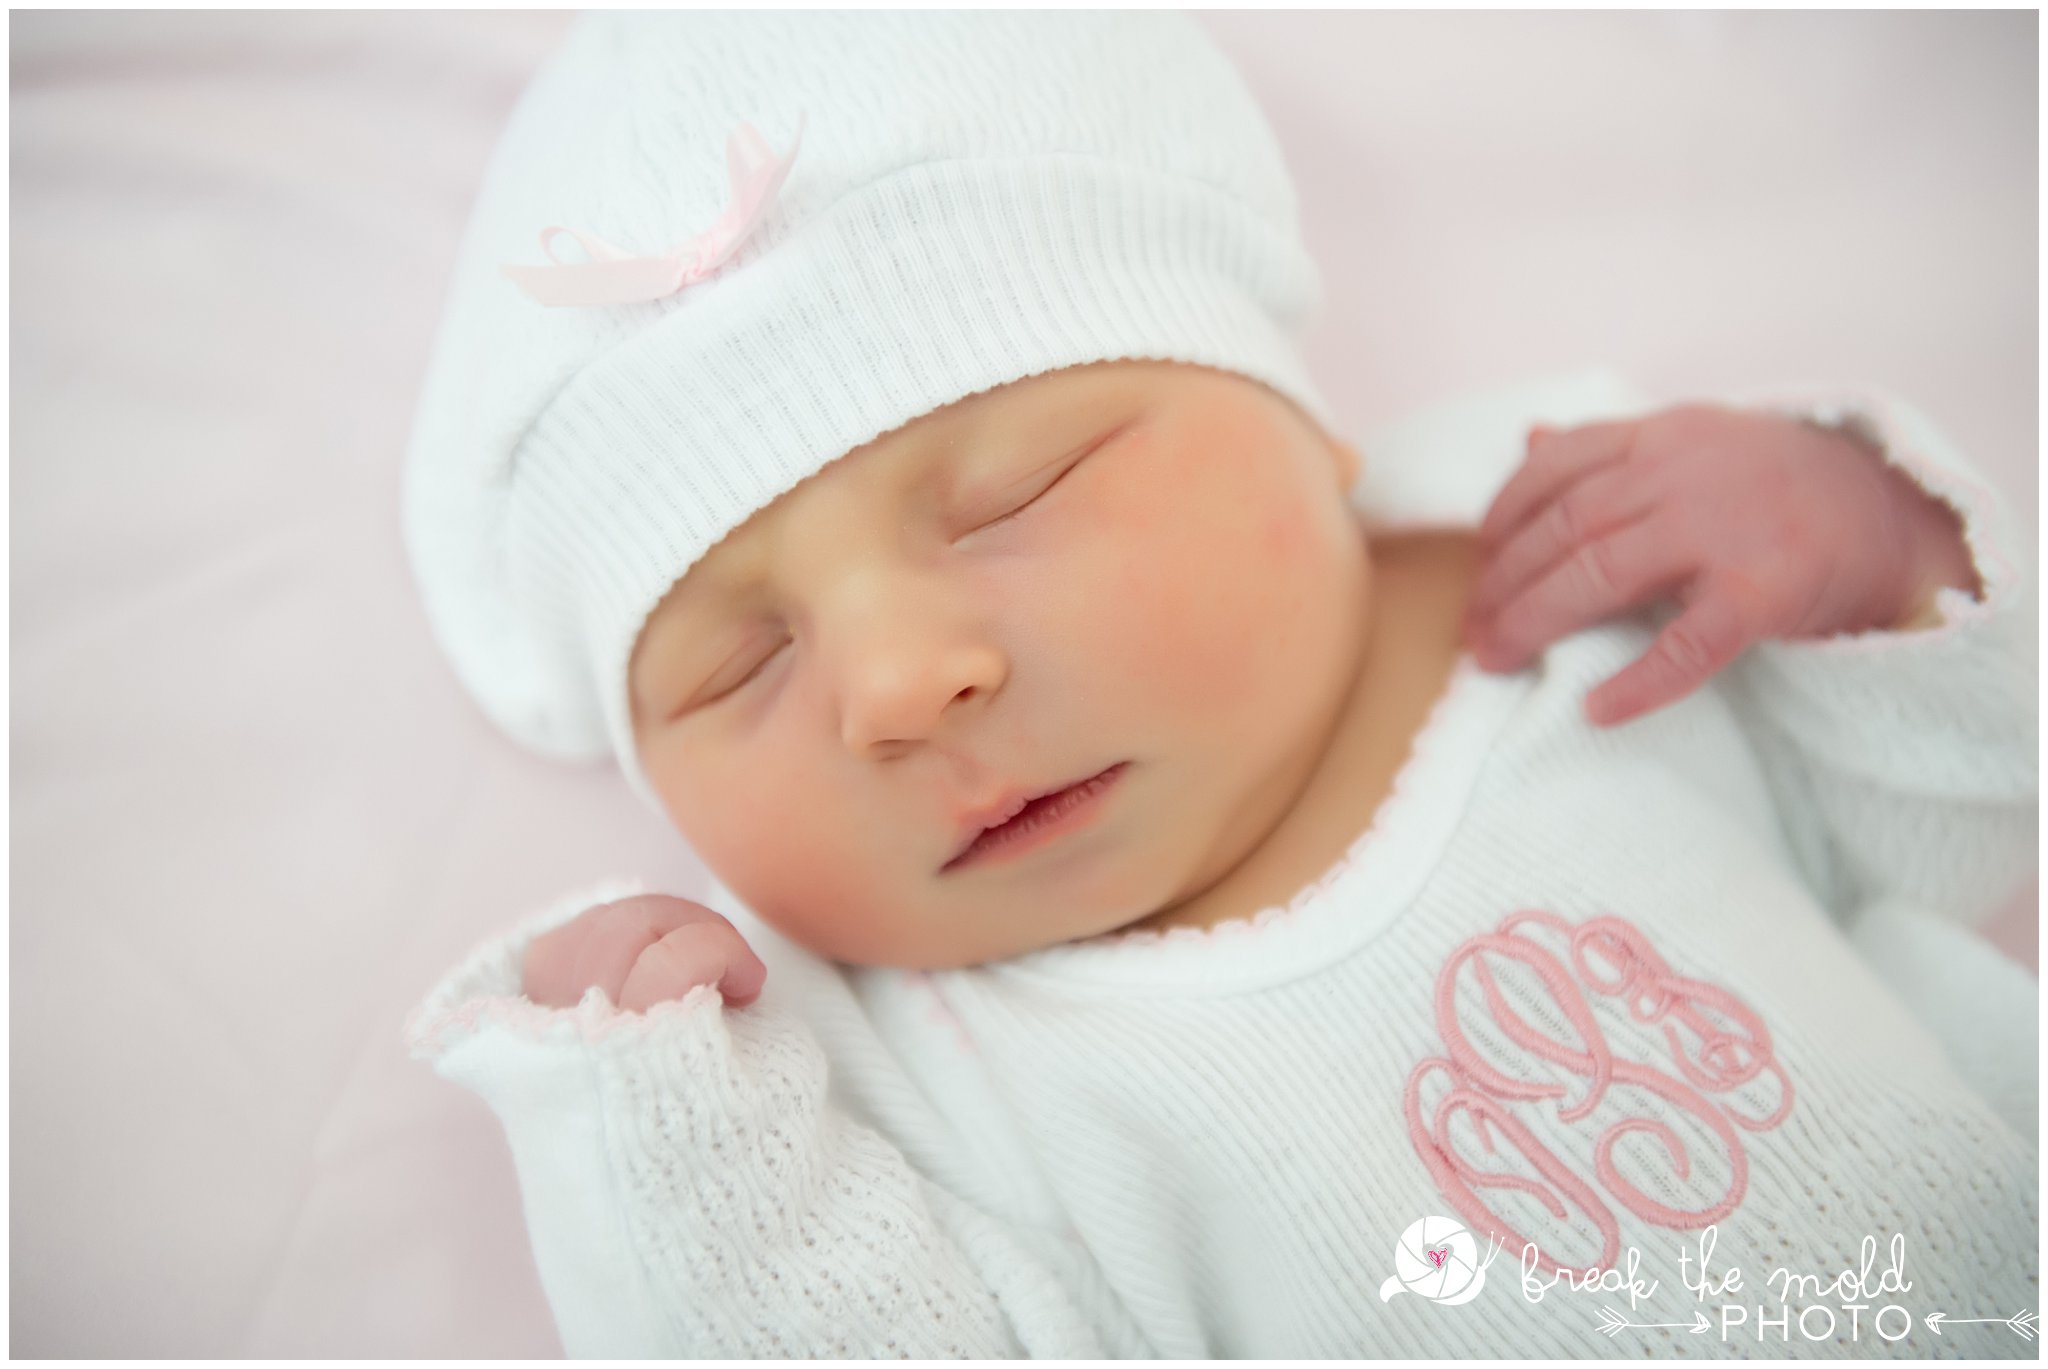 fresh-24-newborn-in-hospital-break-the-mold-photo-baby-girl-sweet-in-room-photos (31).jpg